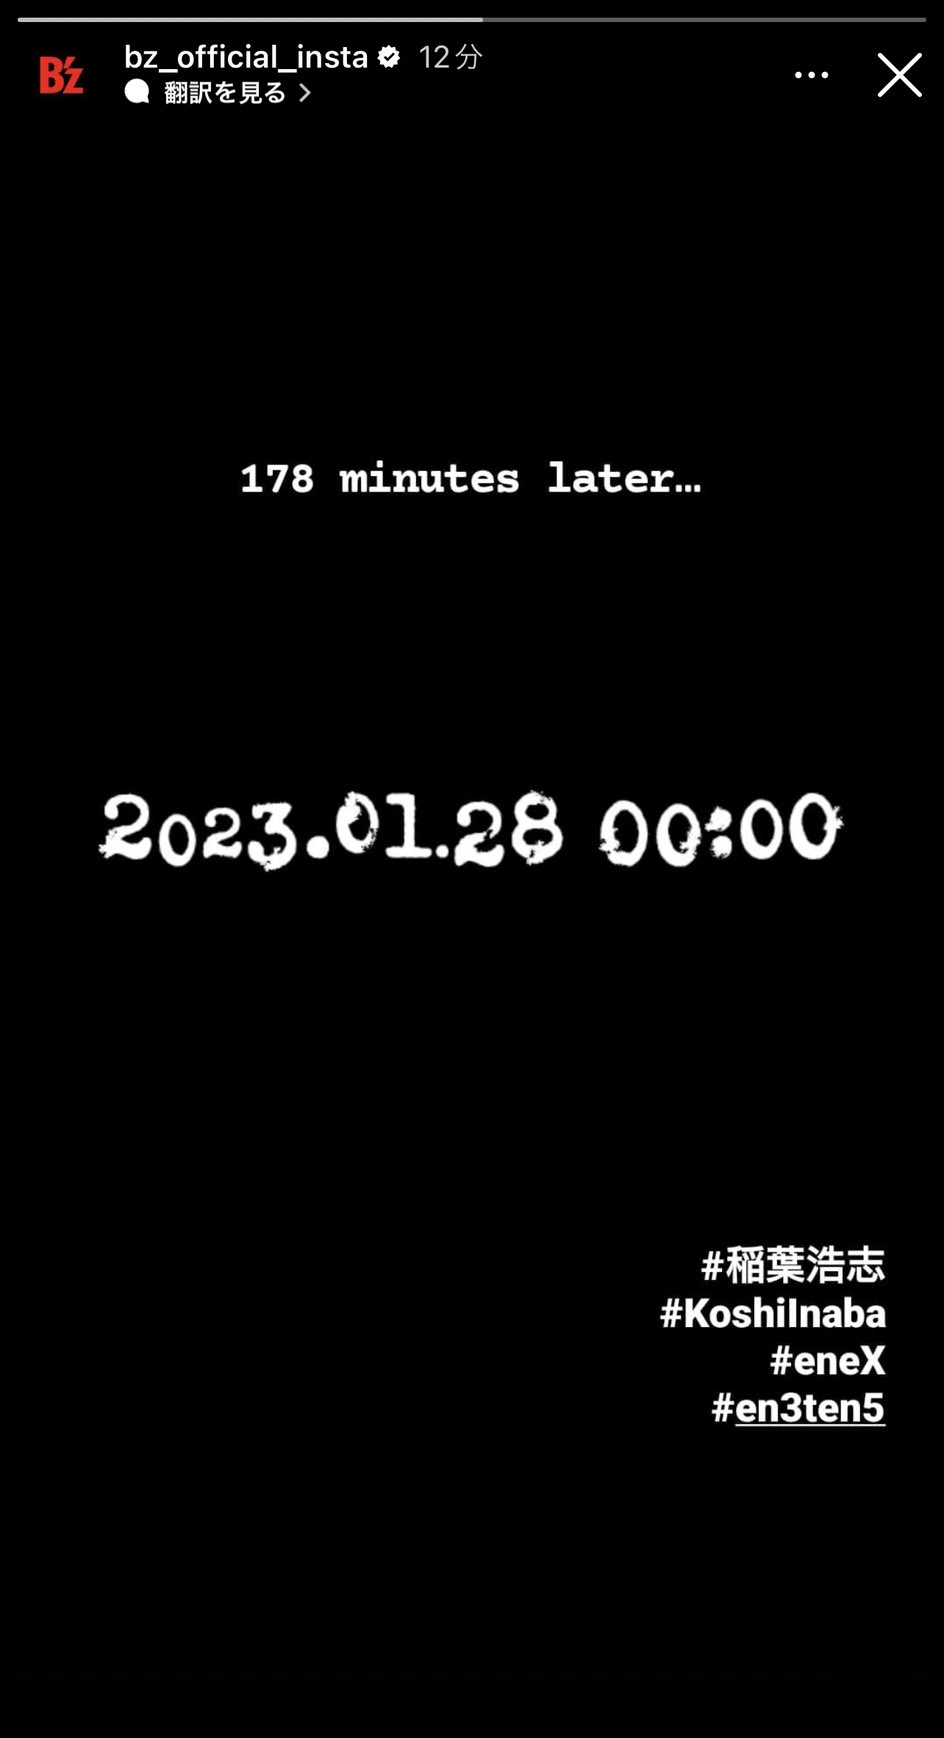 B'zの公式Instagramに投稿された「178 minutes later…」の画像